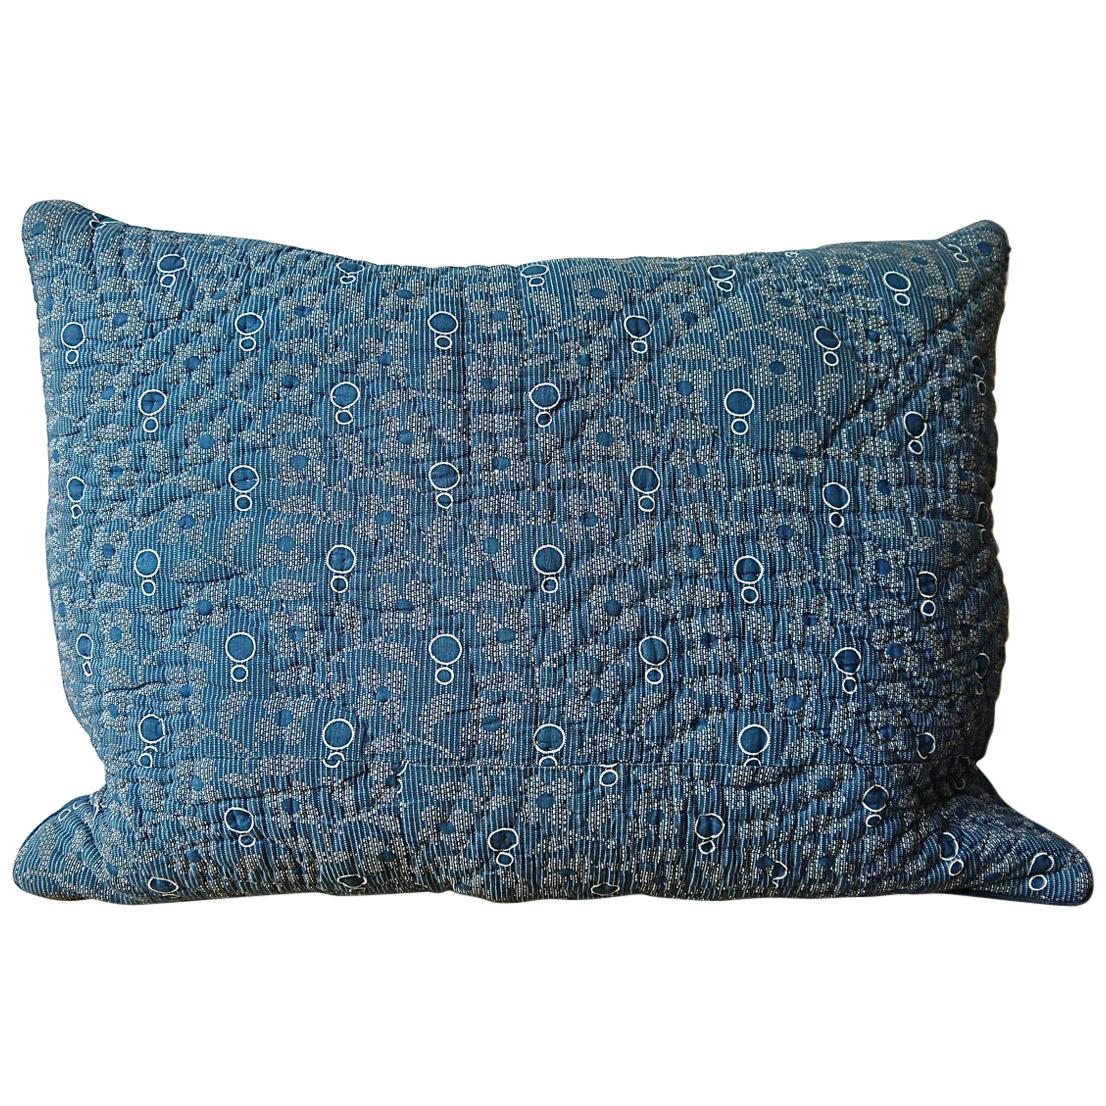 Indigo Resist Blockprinted Cotton Pillow, French, circa 1800 For Sale